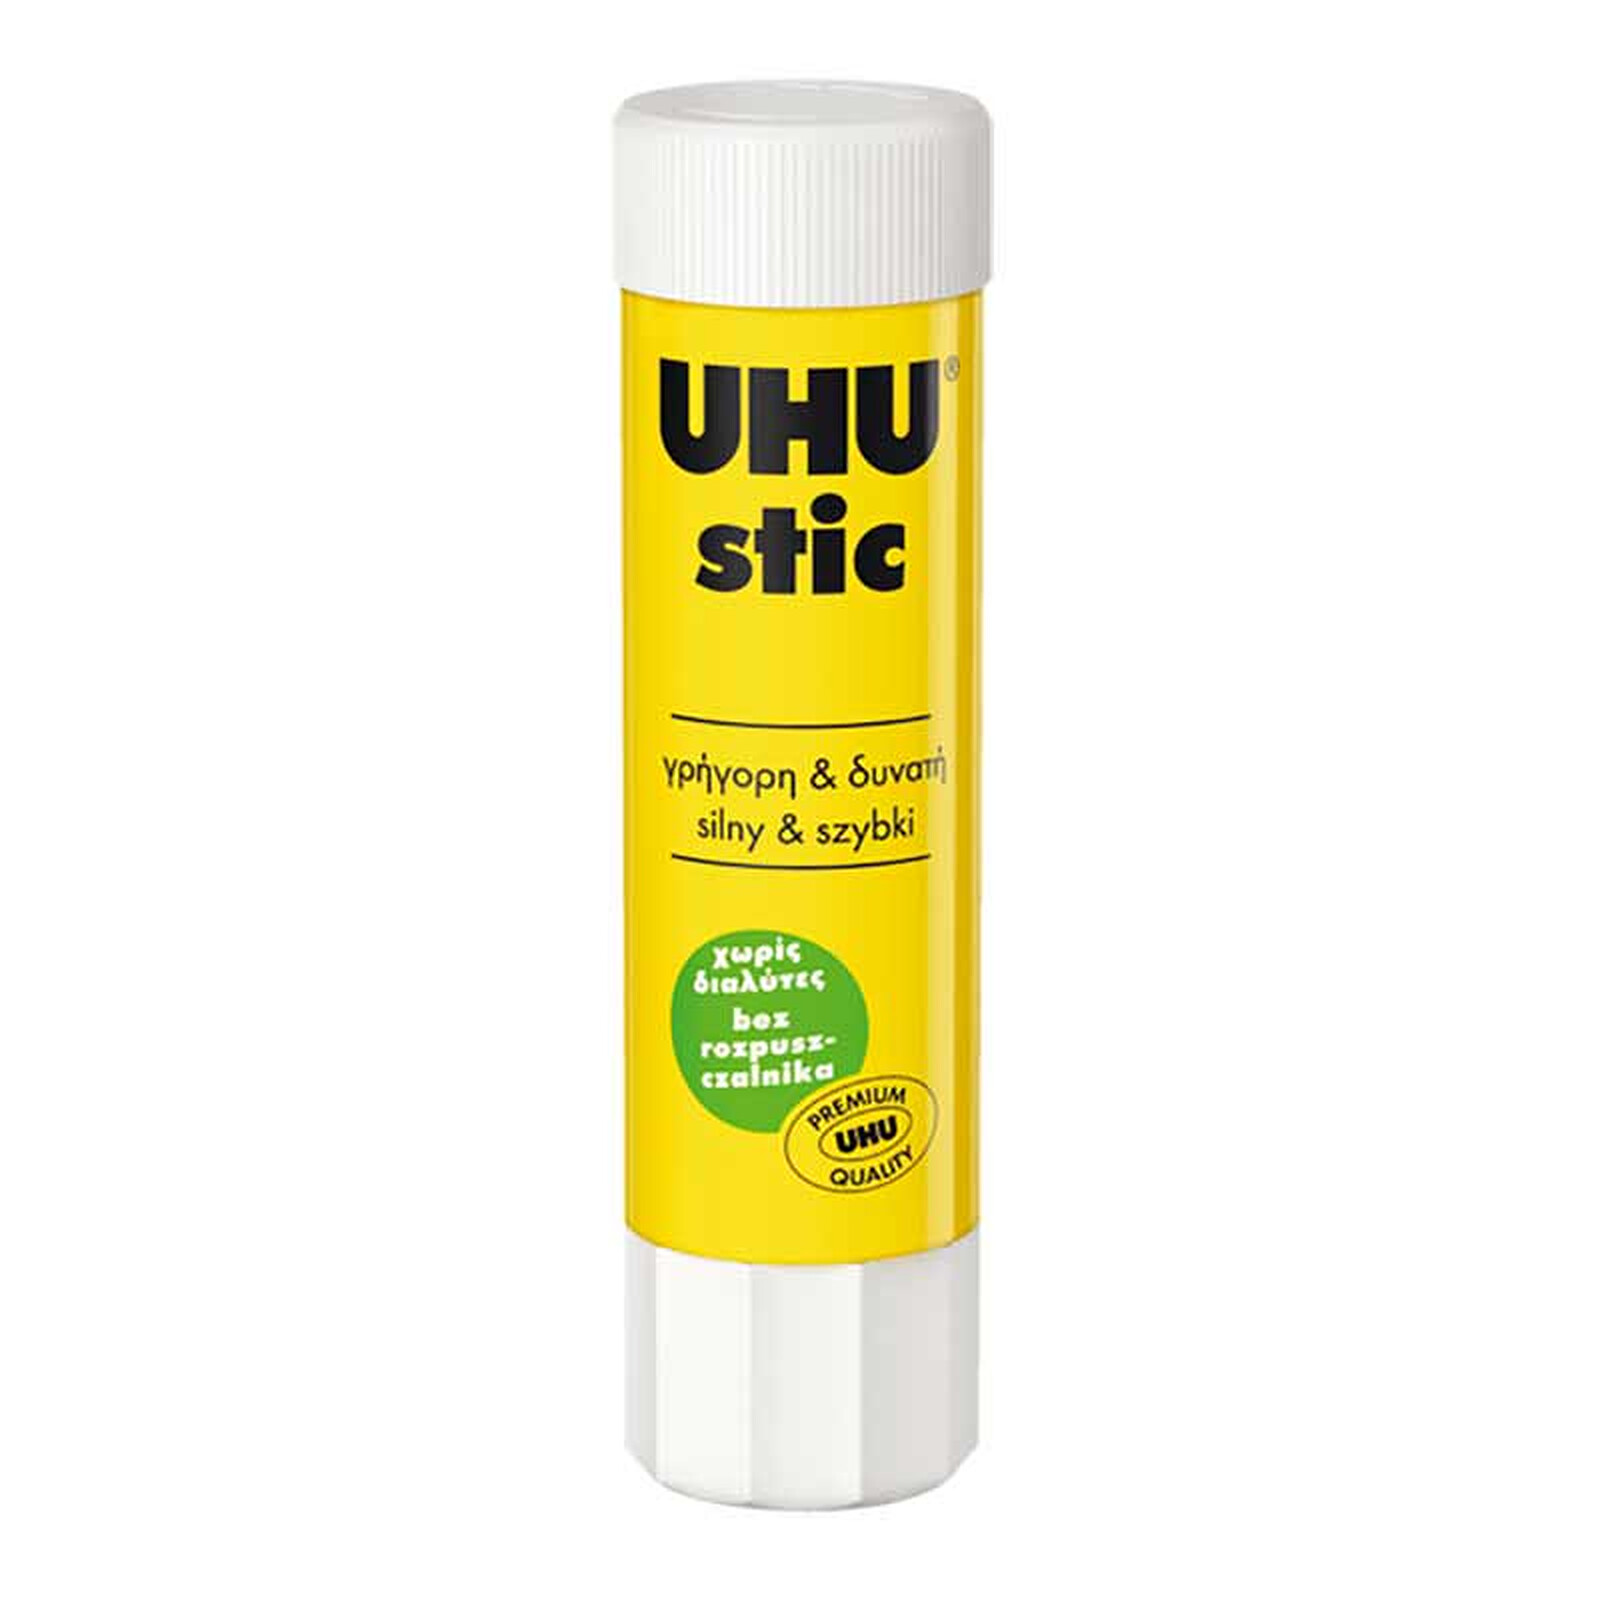 UHU Stic baton de colle 8,2 g - Ruban adhésif & colle - LDLC